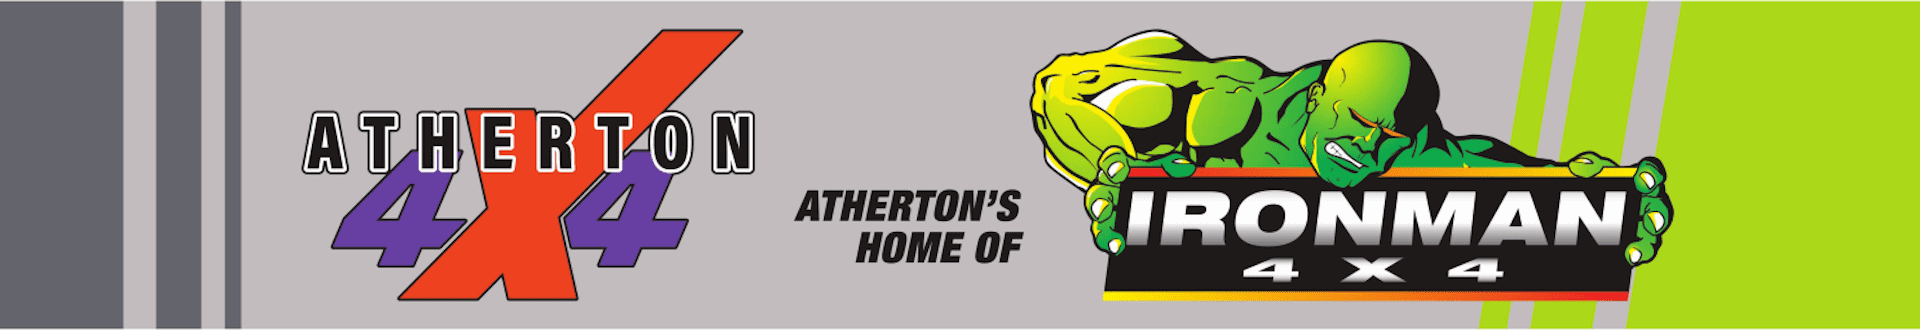 atherton4x4-big